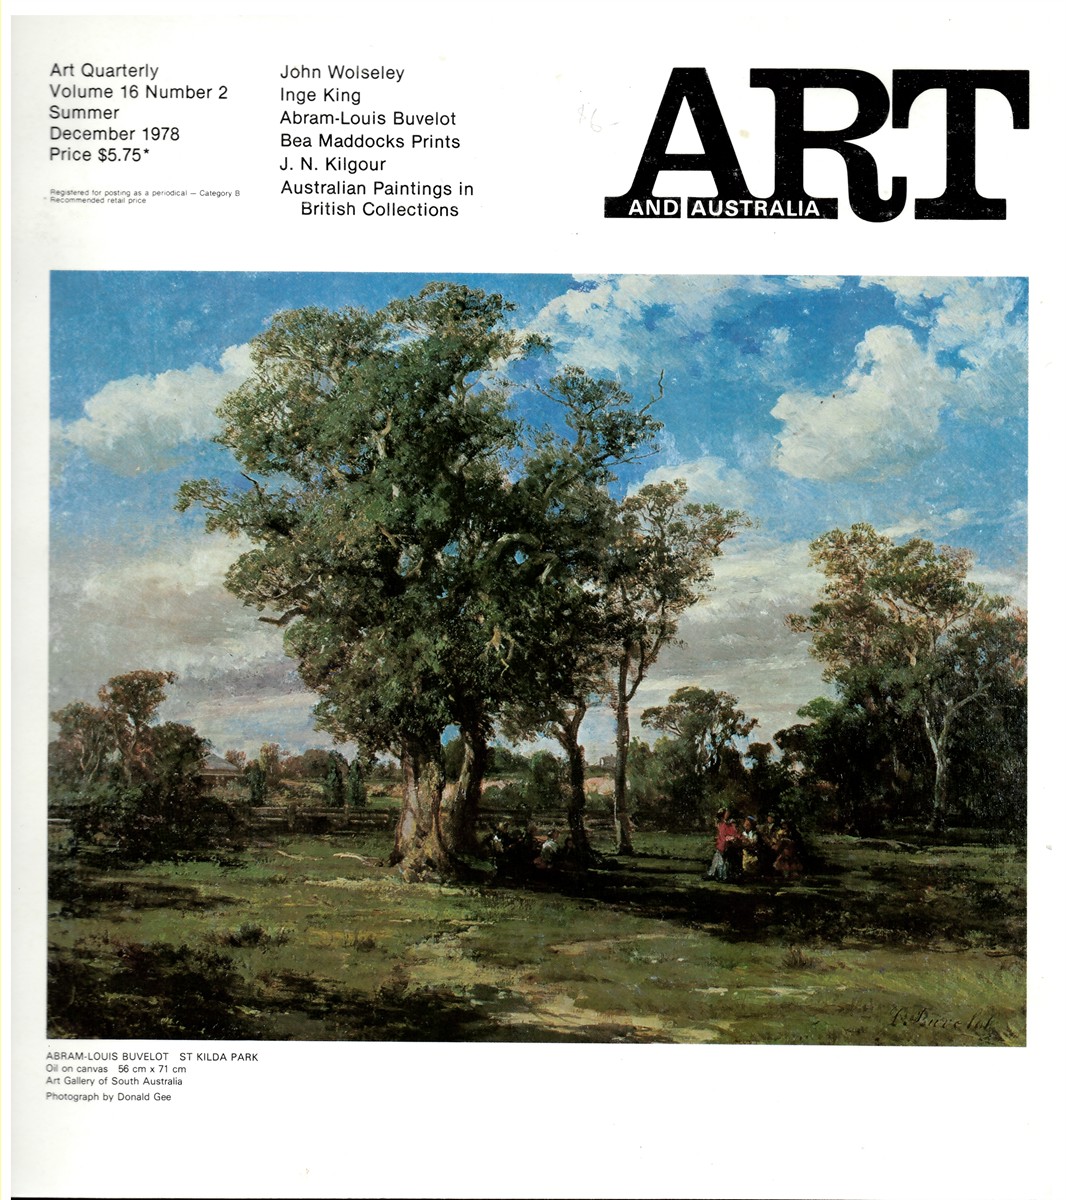 HORTON, MERVYN (EDITOR) - Art and Australia. Volume 16 Number 2 Summer December 1978